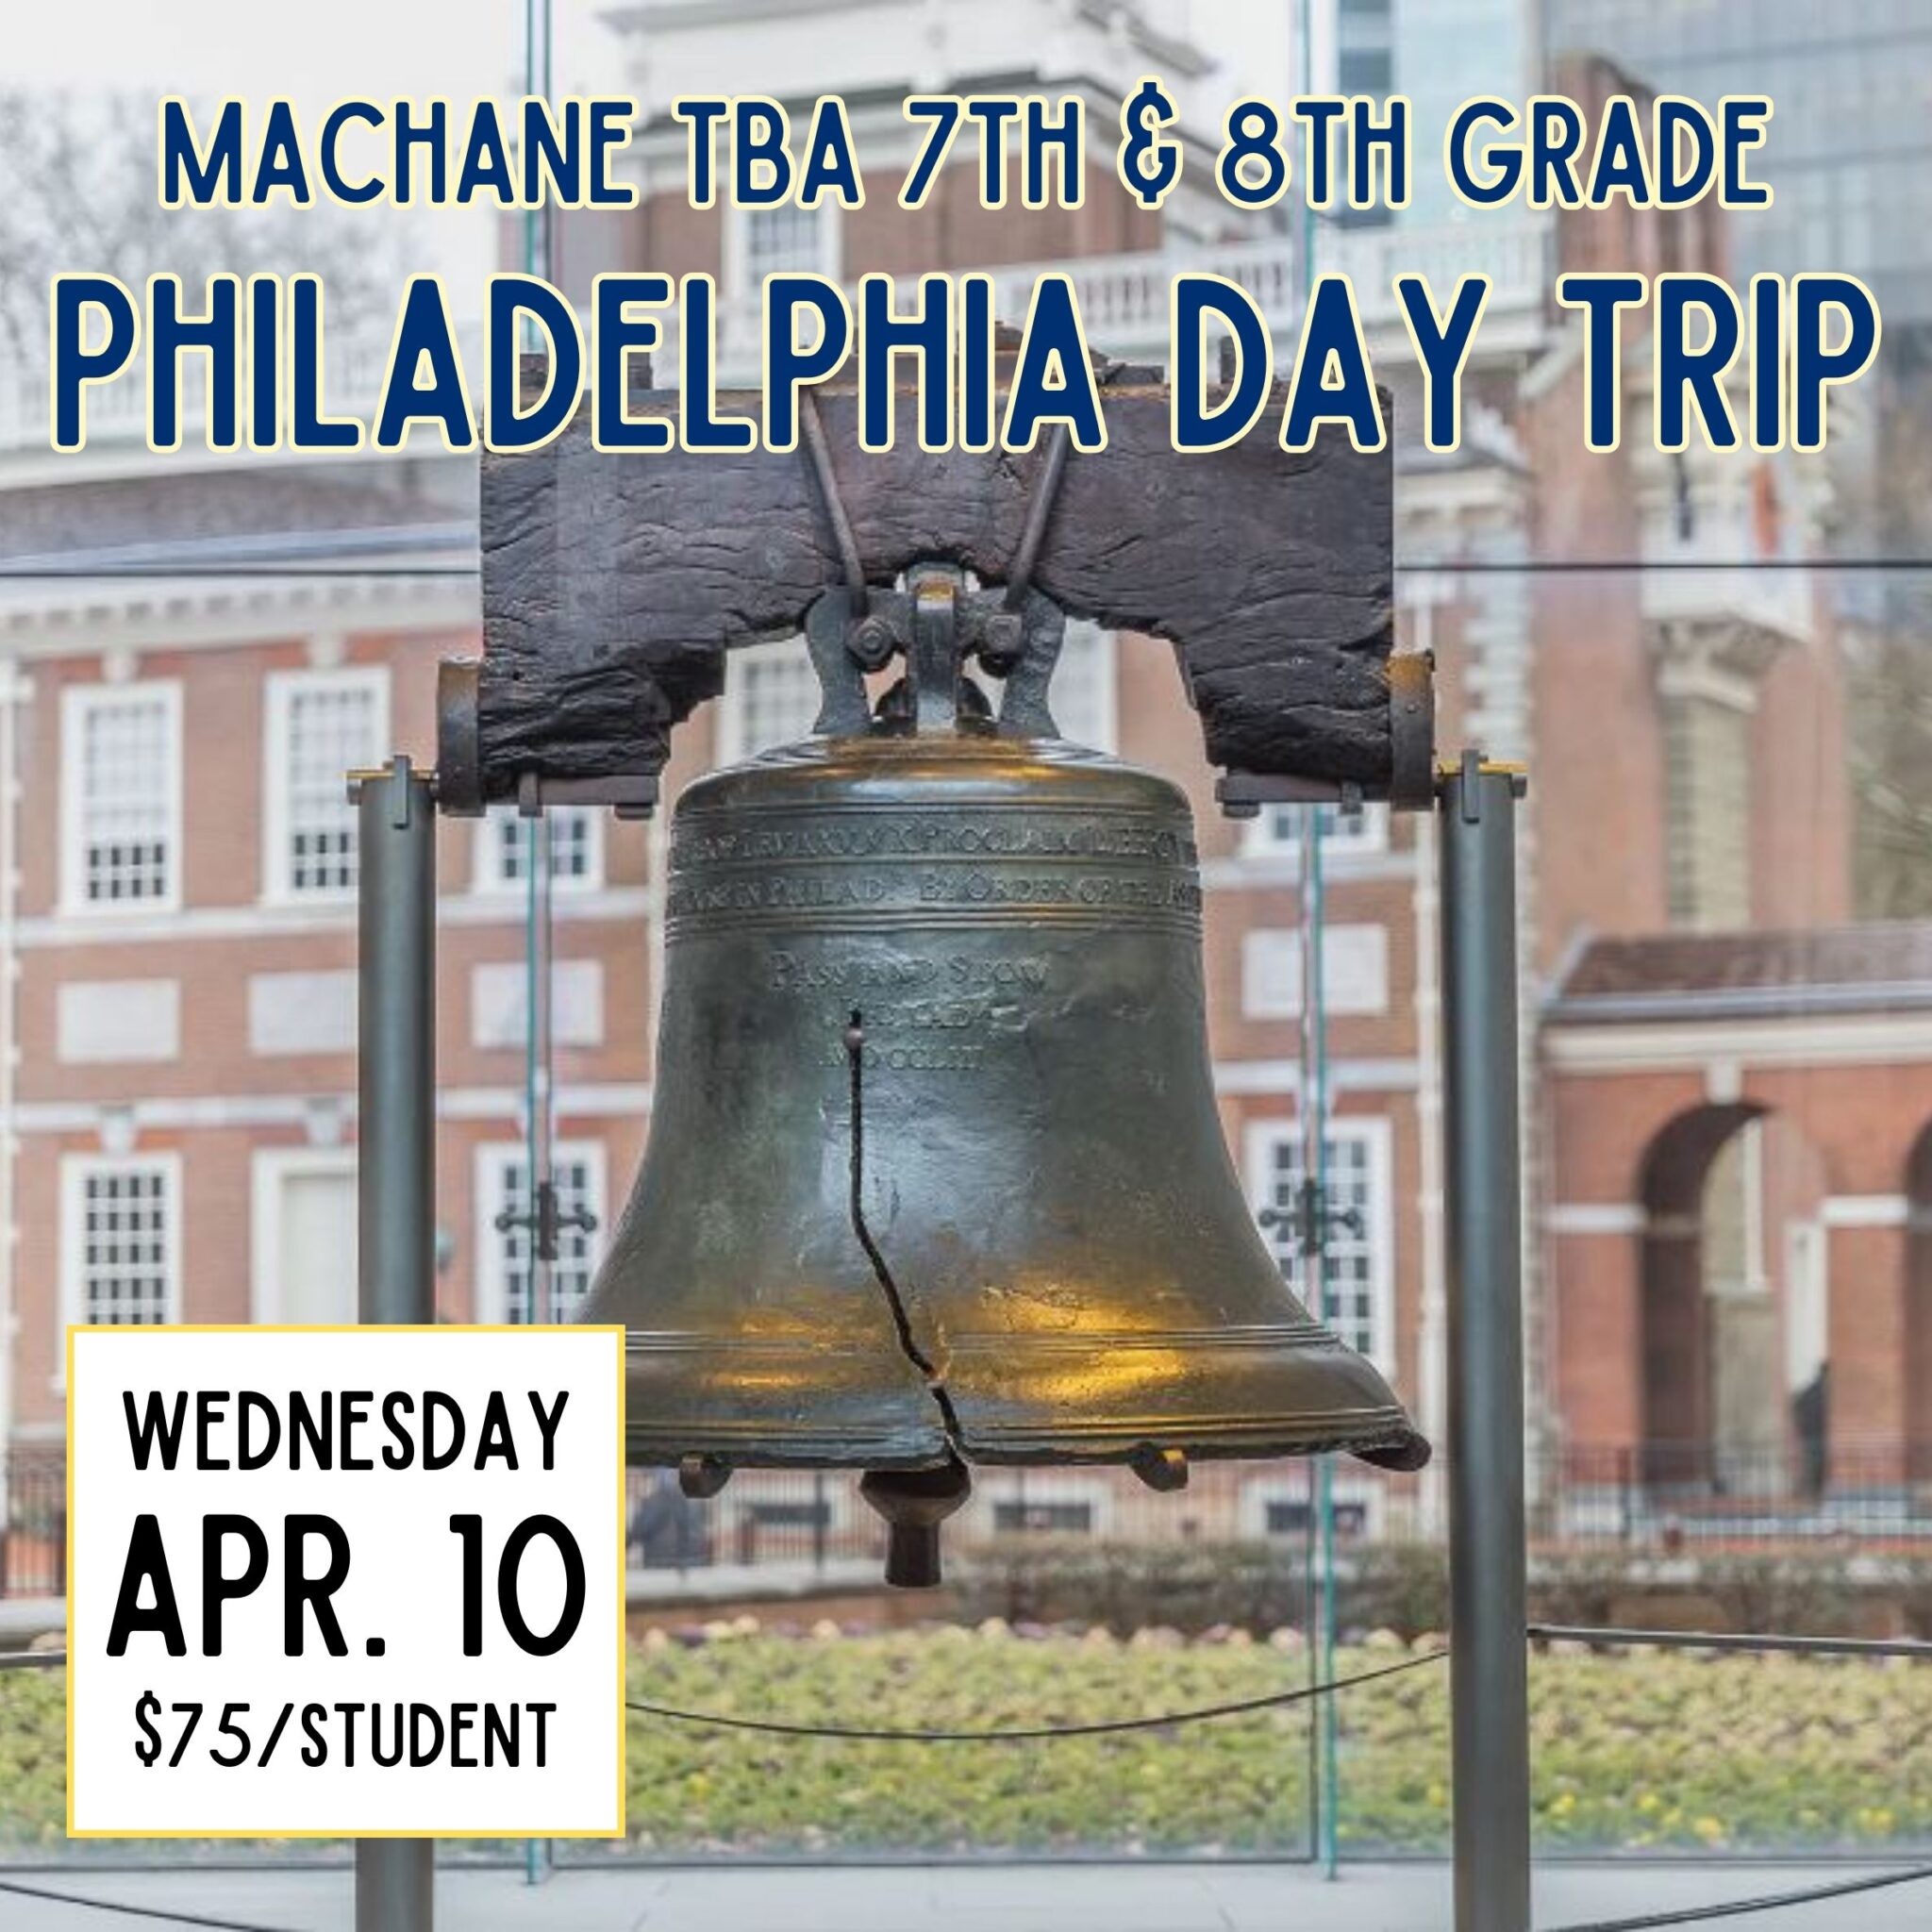 7th & 8th Grade Philadelphia Day Trip